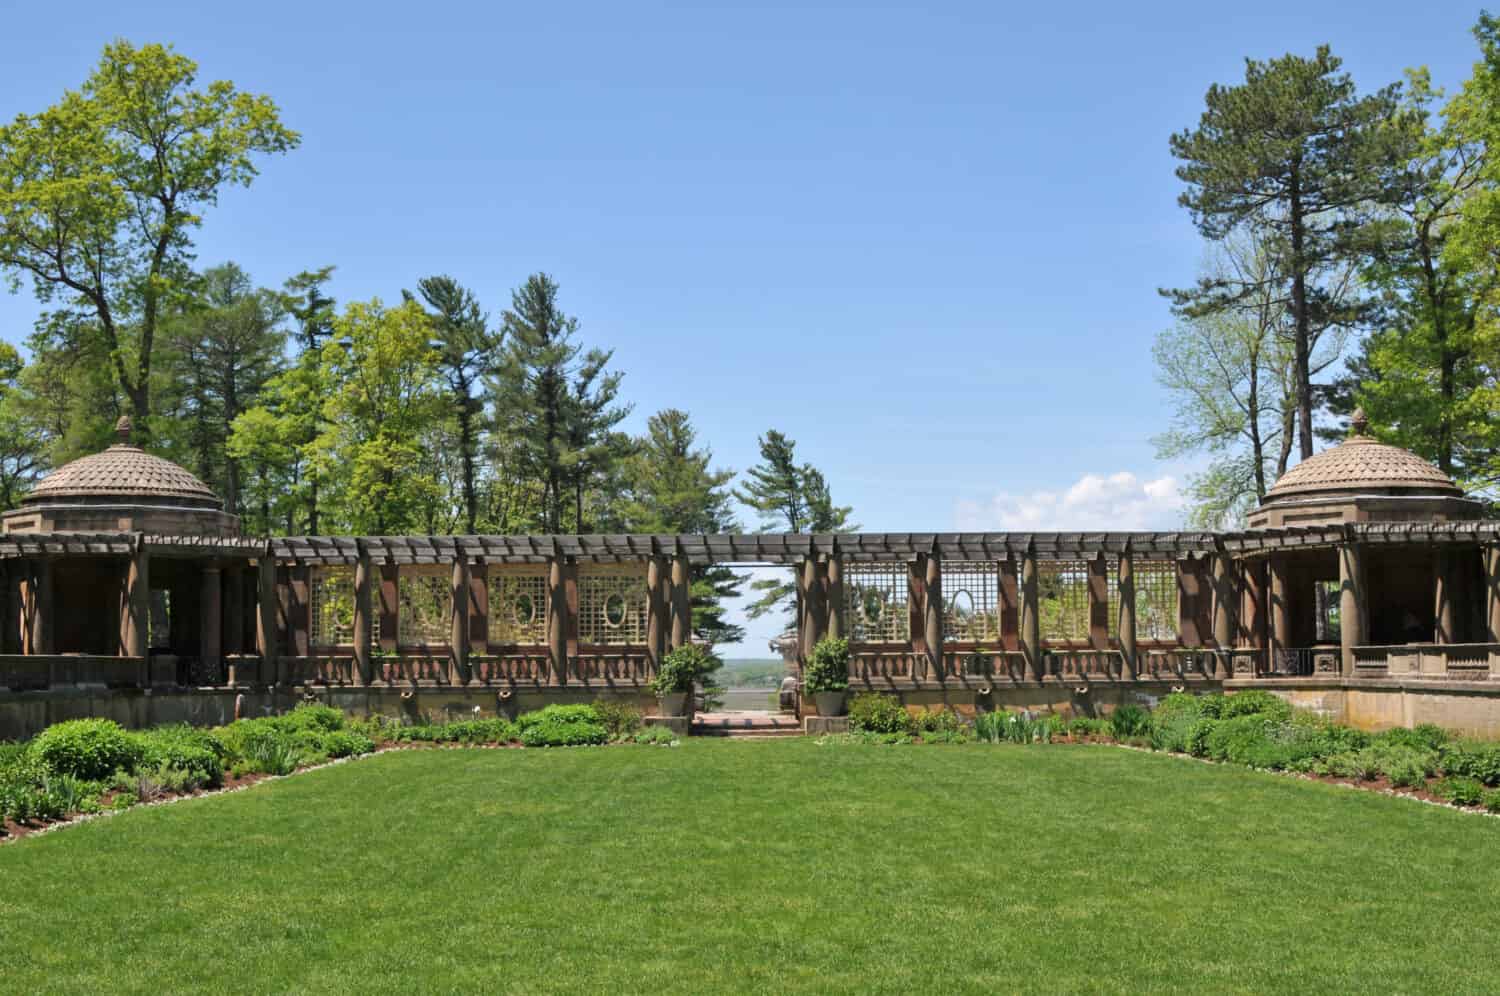 Sunken garden at Castle Hill, part of the Crane Estate in Ipswich, Massachusetts